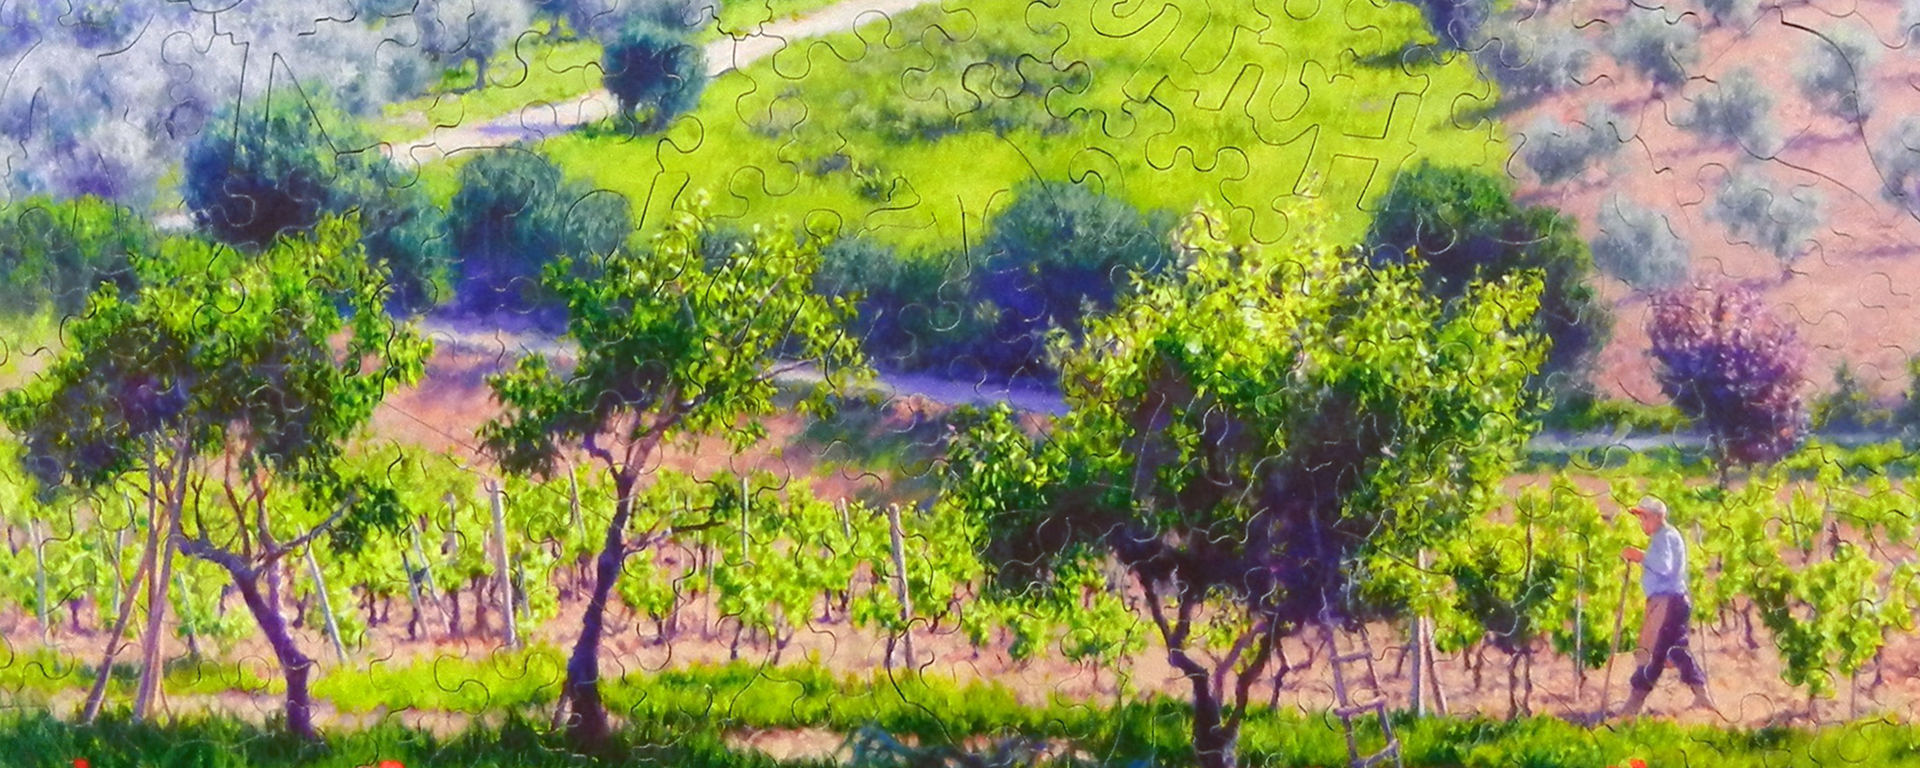 Wooden vineyard puzzle featuring a viticulturist walking through the vineyard.